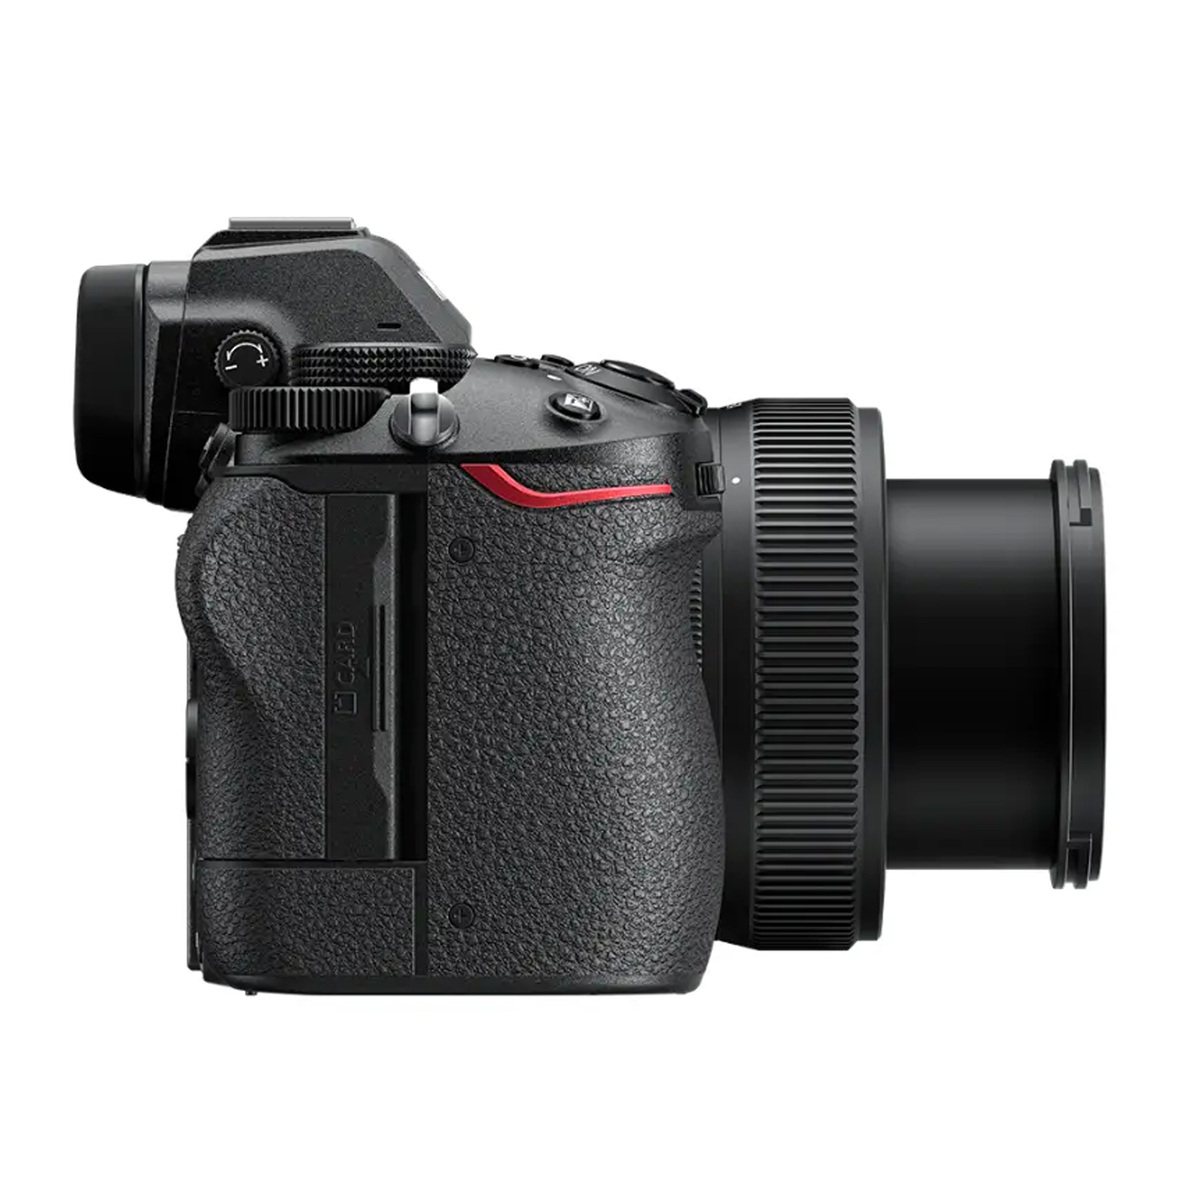 Nikon Z5 Mirrorless Full Frame Camera, 24.3 MP, 24-70 mm